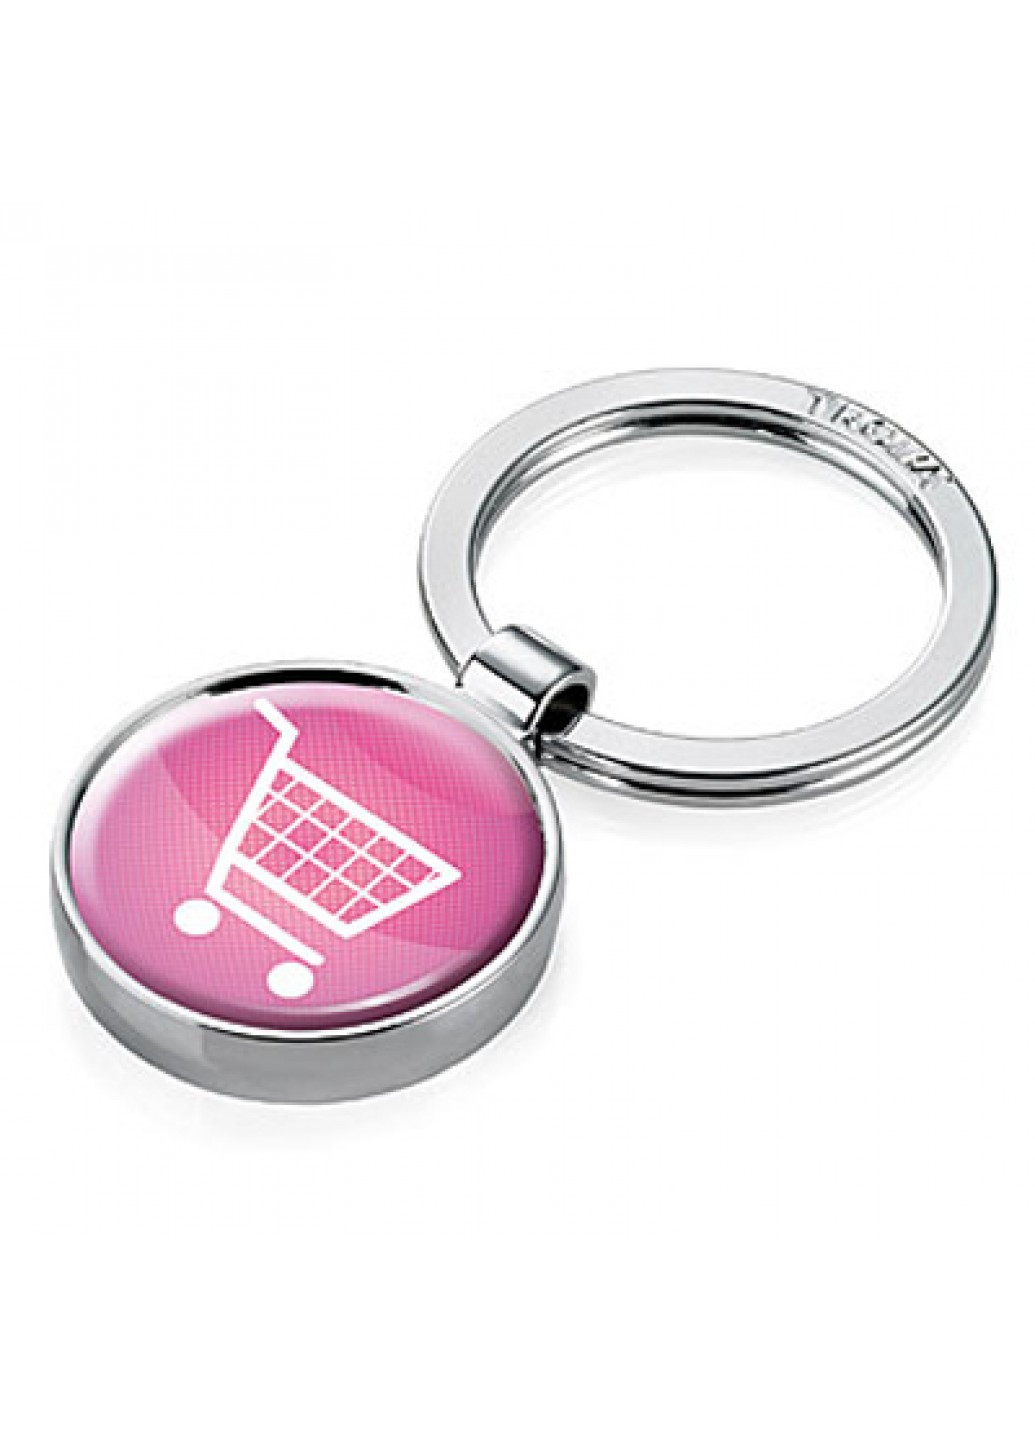 Брелок Shopping; розовый, Troika kyr14-a142 (208083059)